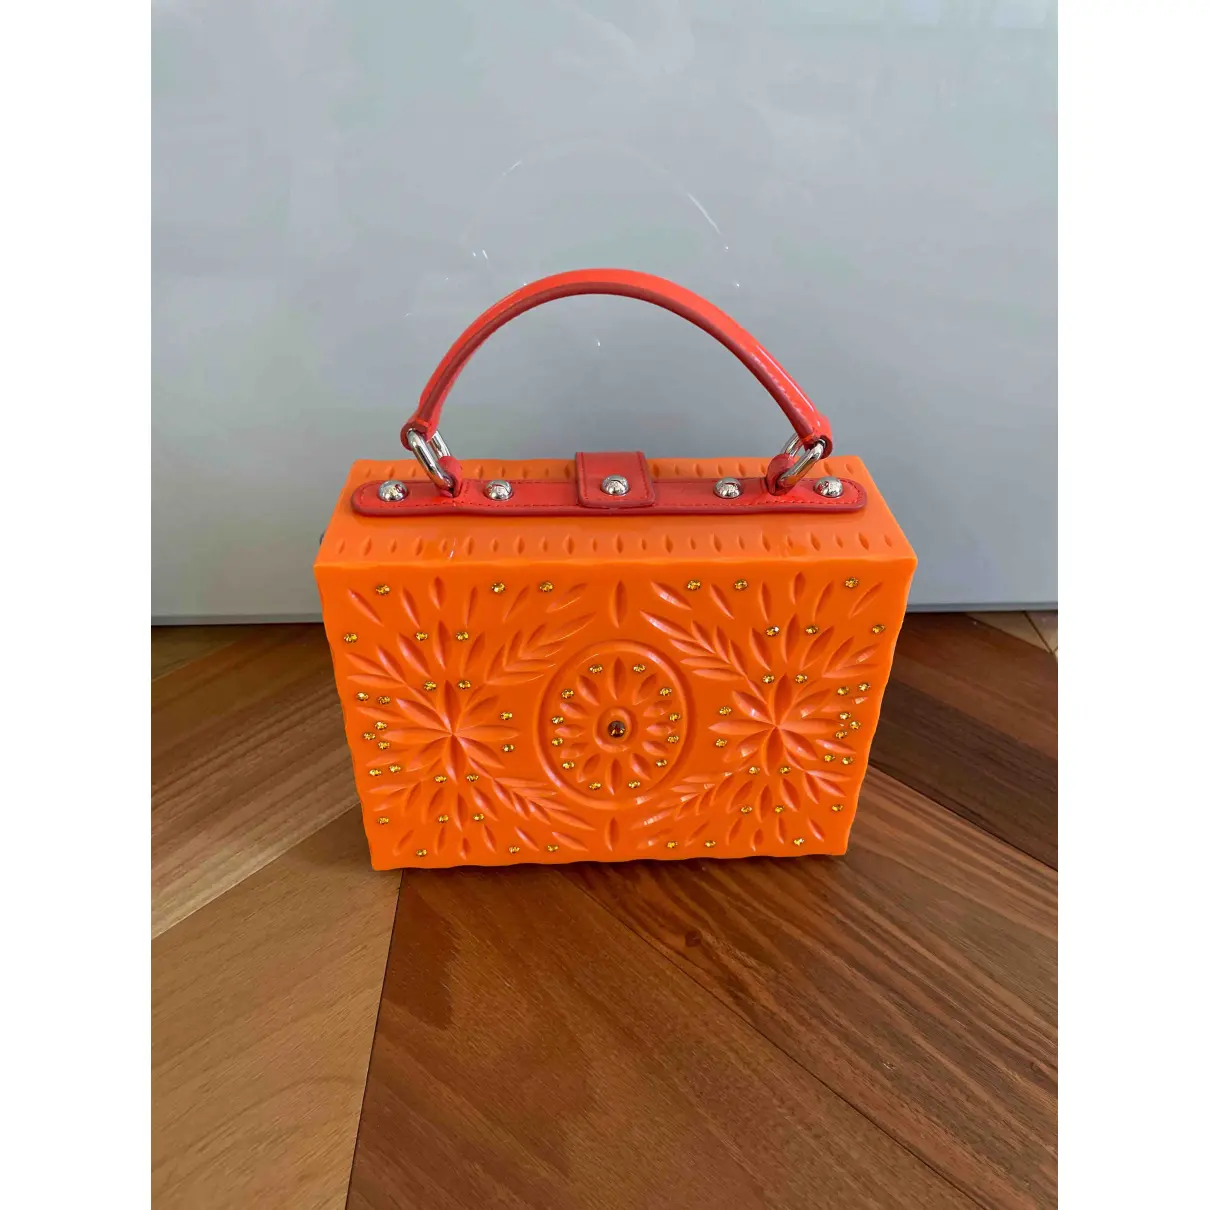 Buy Dolce & Gabbana Handbag online